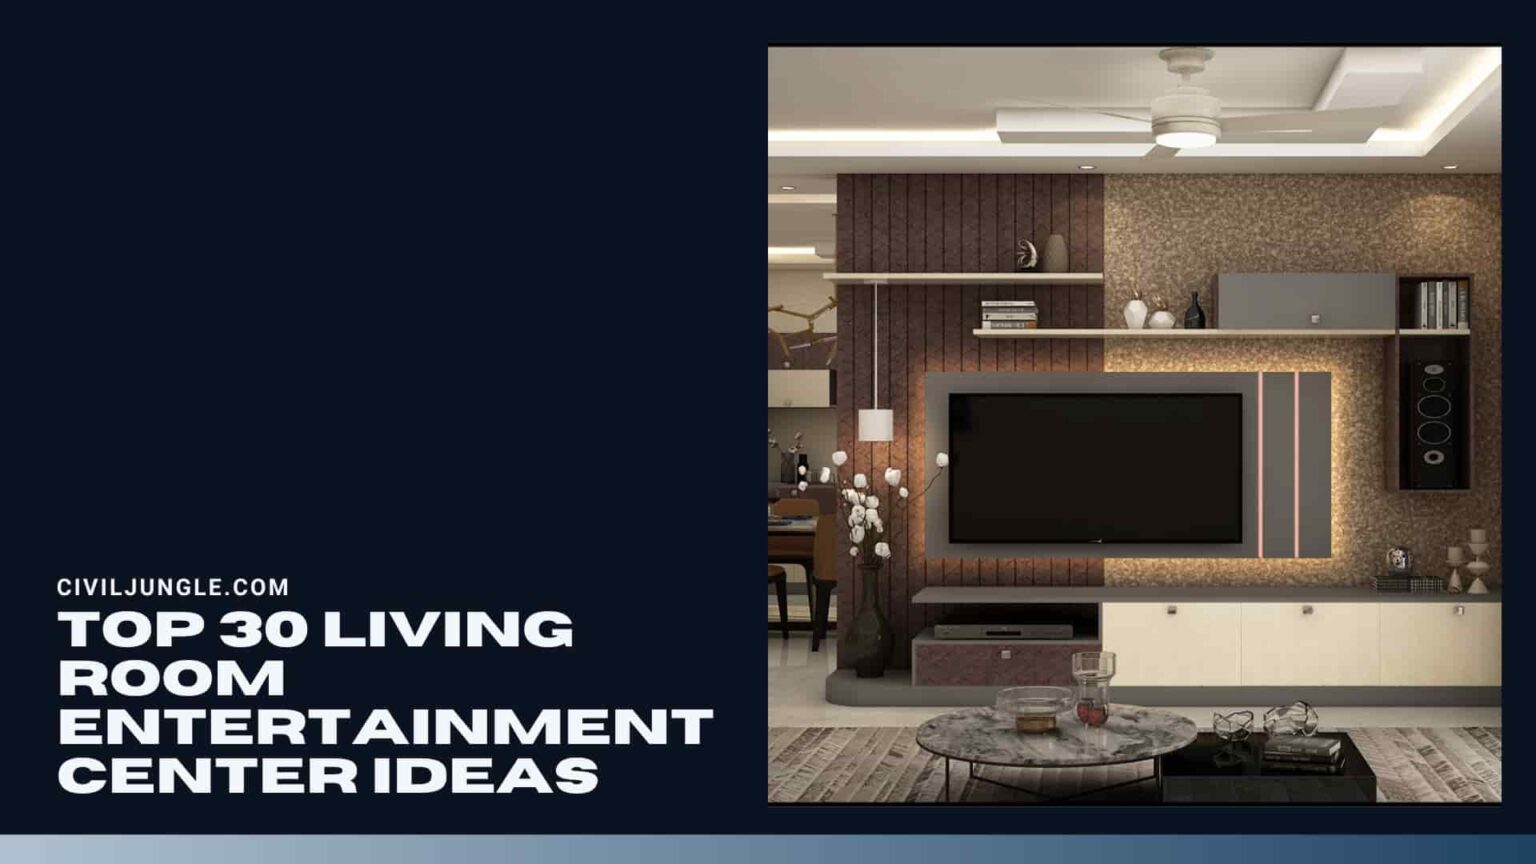 Top 30 Living Room Entertainment Center Ideas